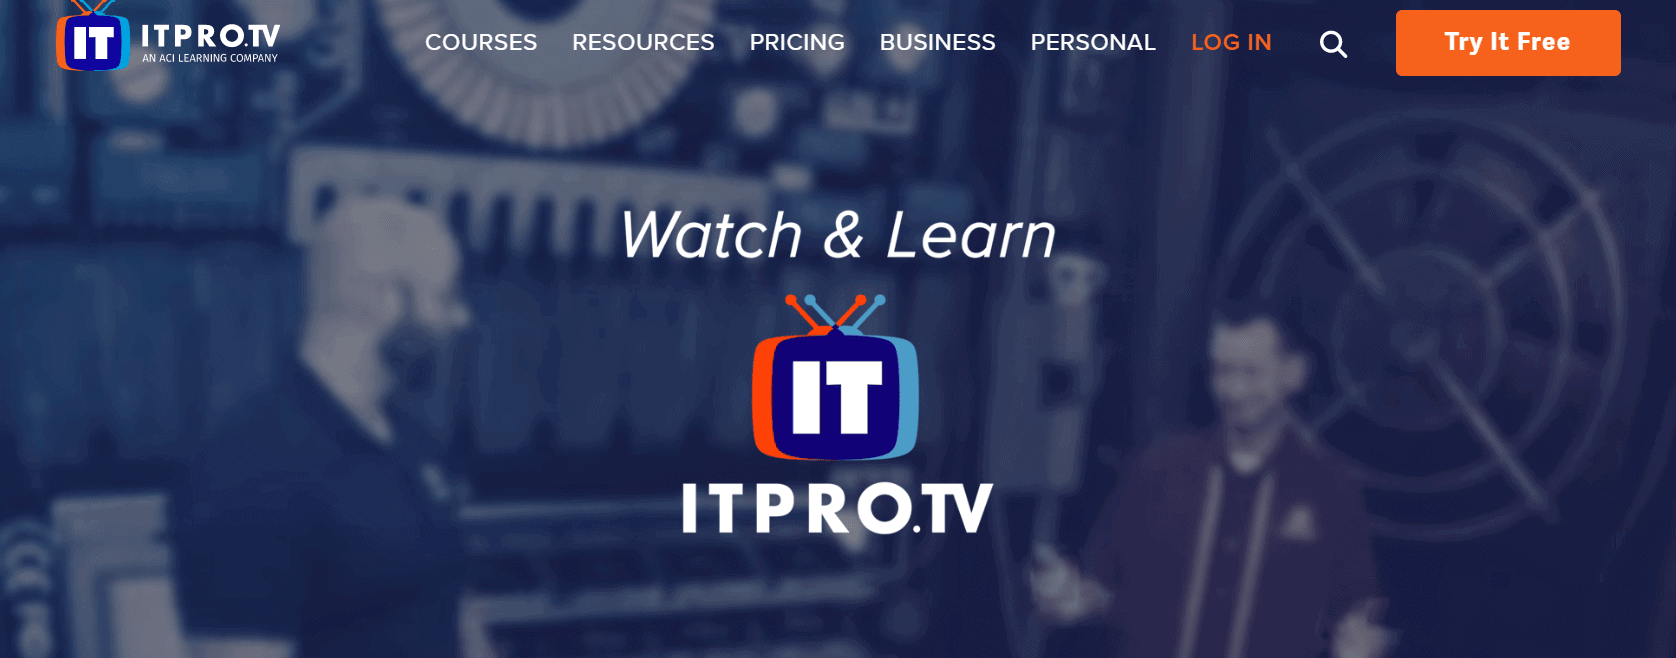 itprotv review